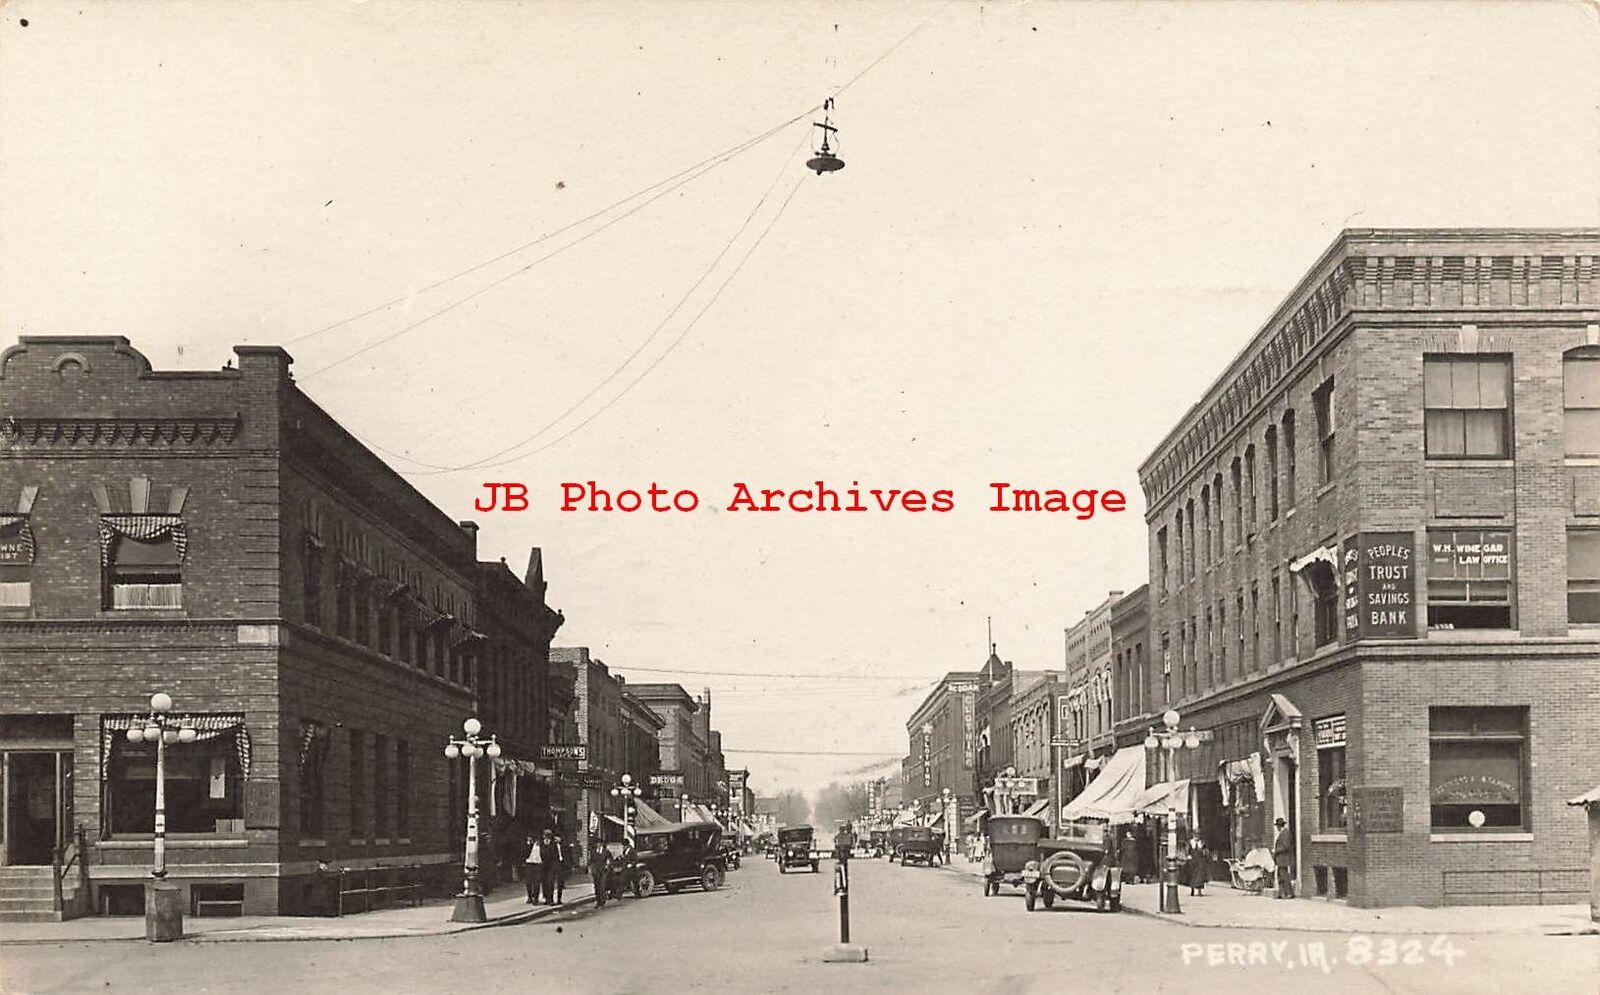 IA, Perry, Iowa, RPPC, Street Scene, Business Section, Bank, 1921 PM, Photo